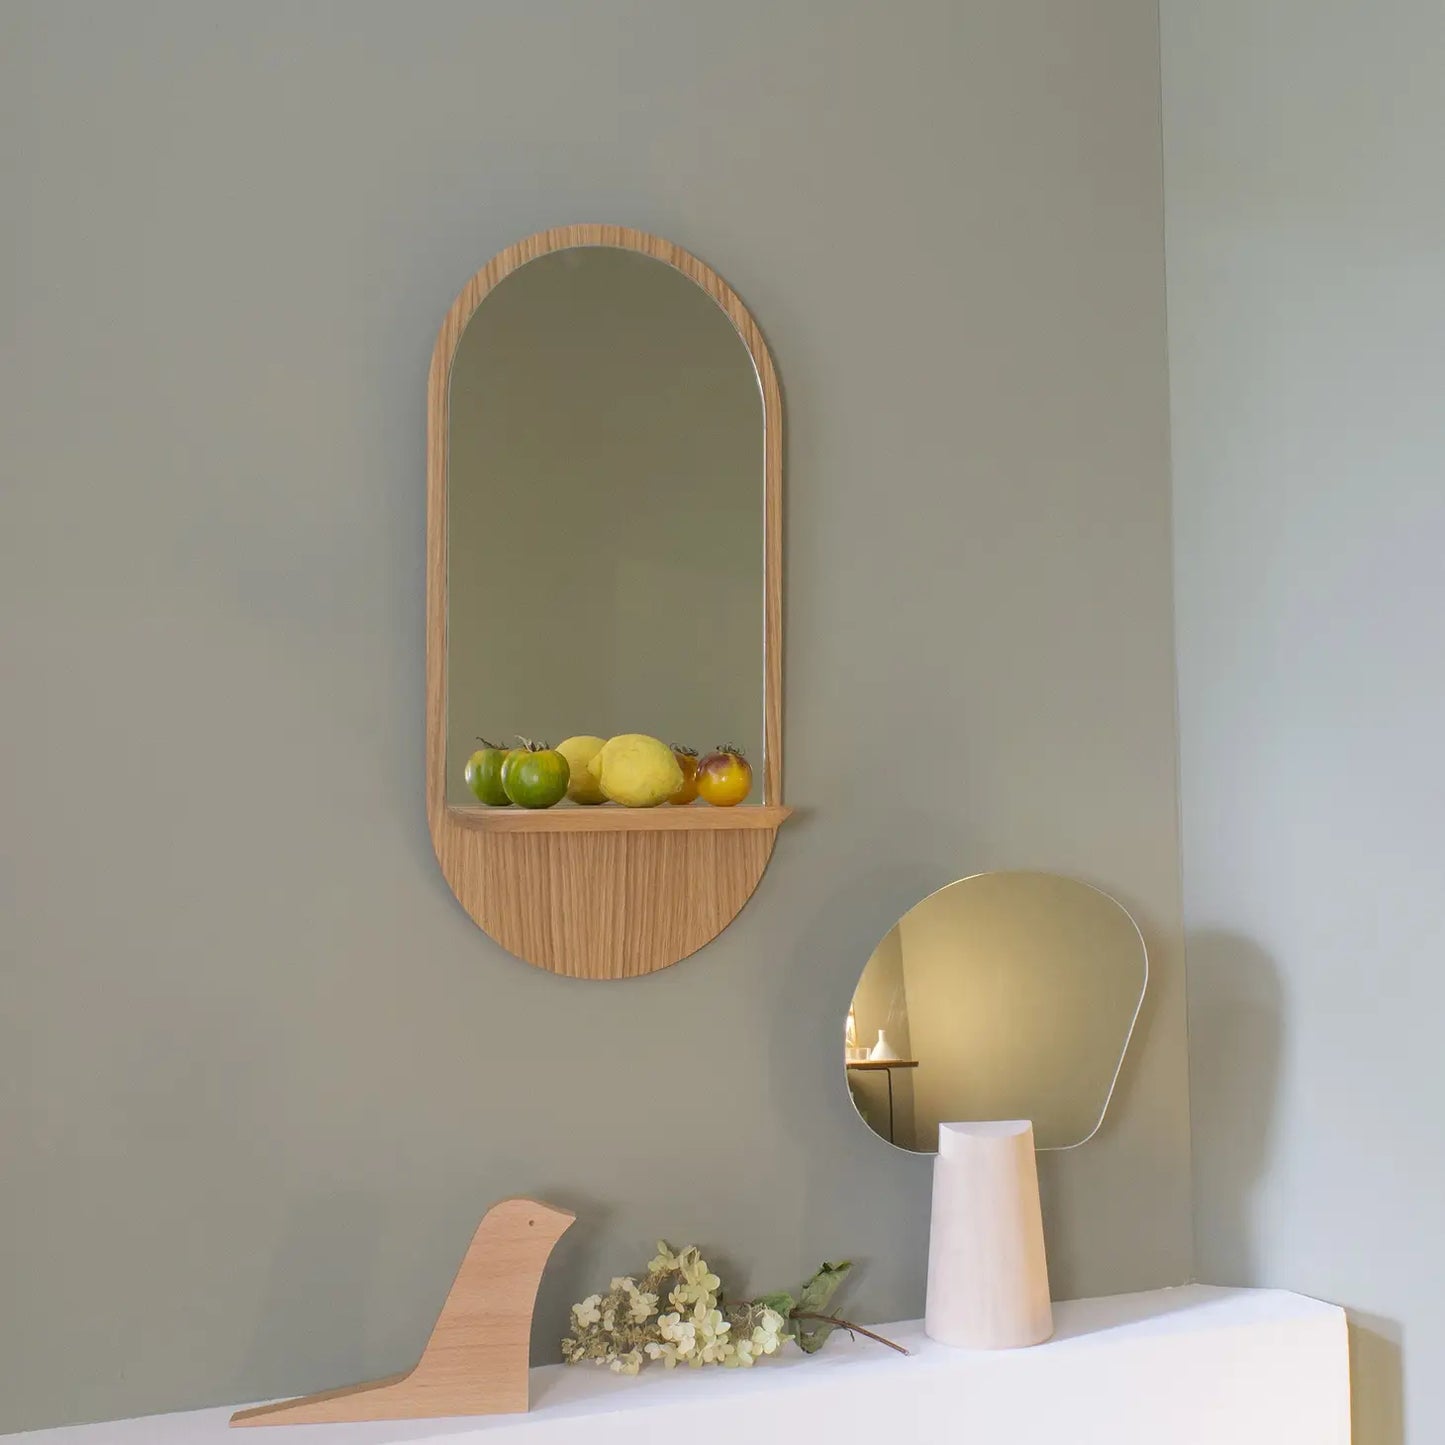 Solstice mirror (made in France) in oak wood